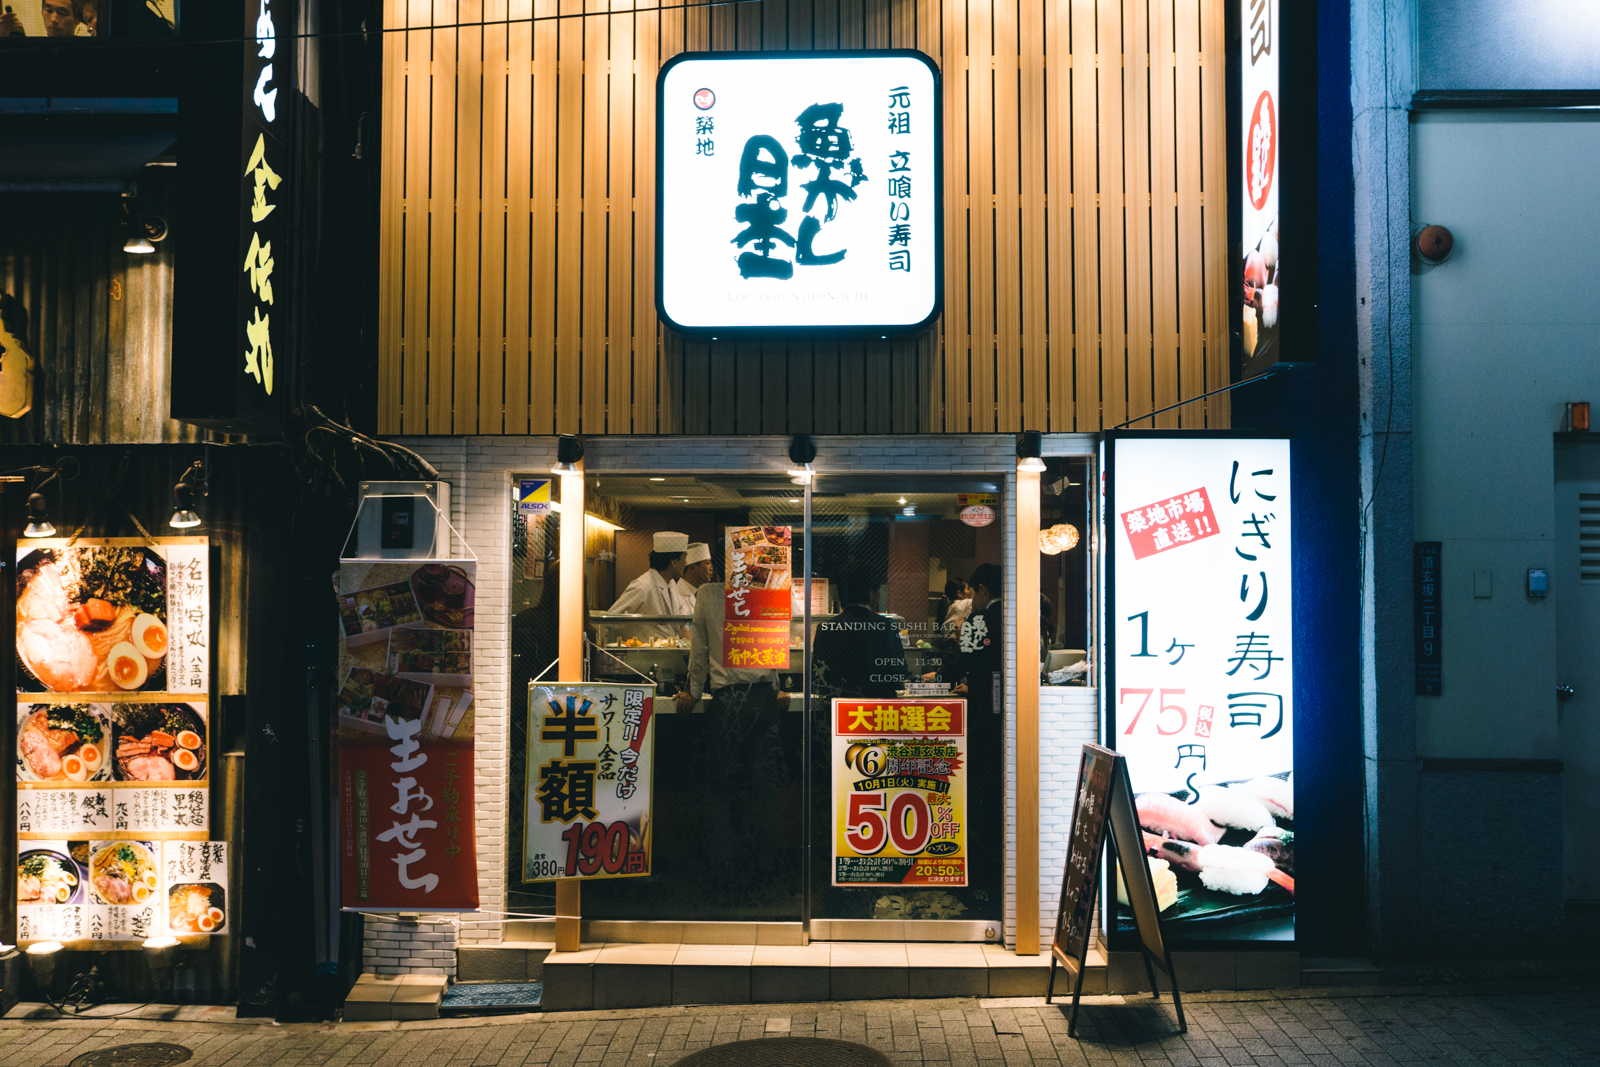 Standing Sushi Bar Shibuya in Tokyo, Japan Review: Best Standing Sushi